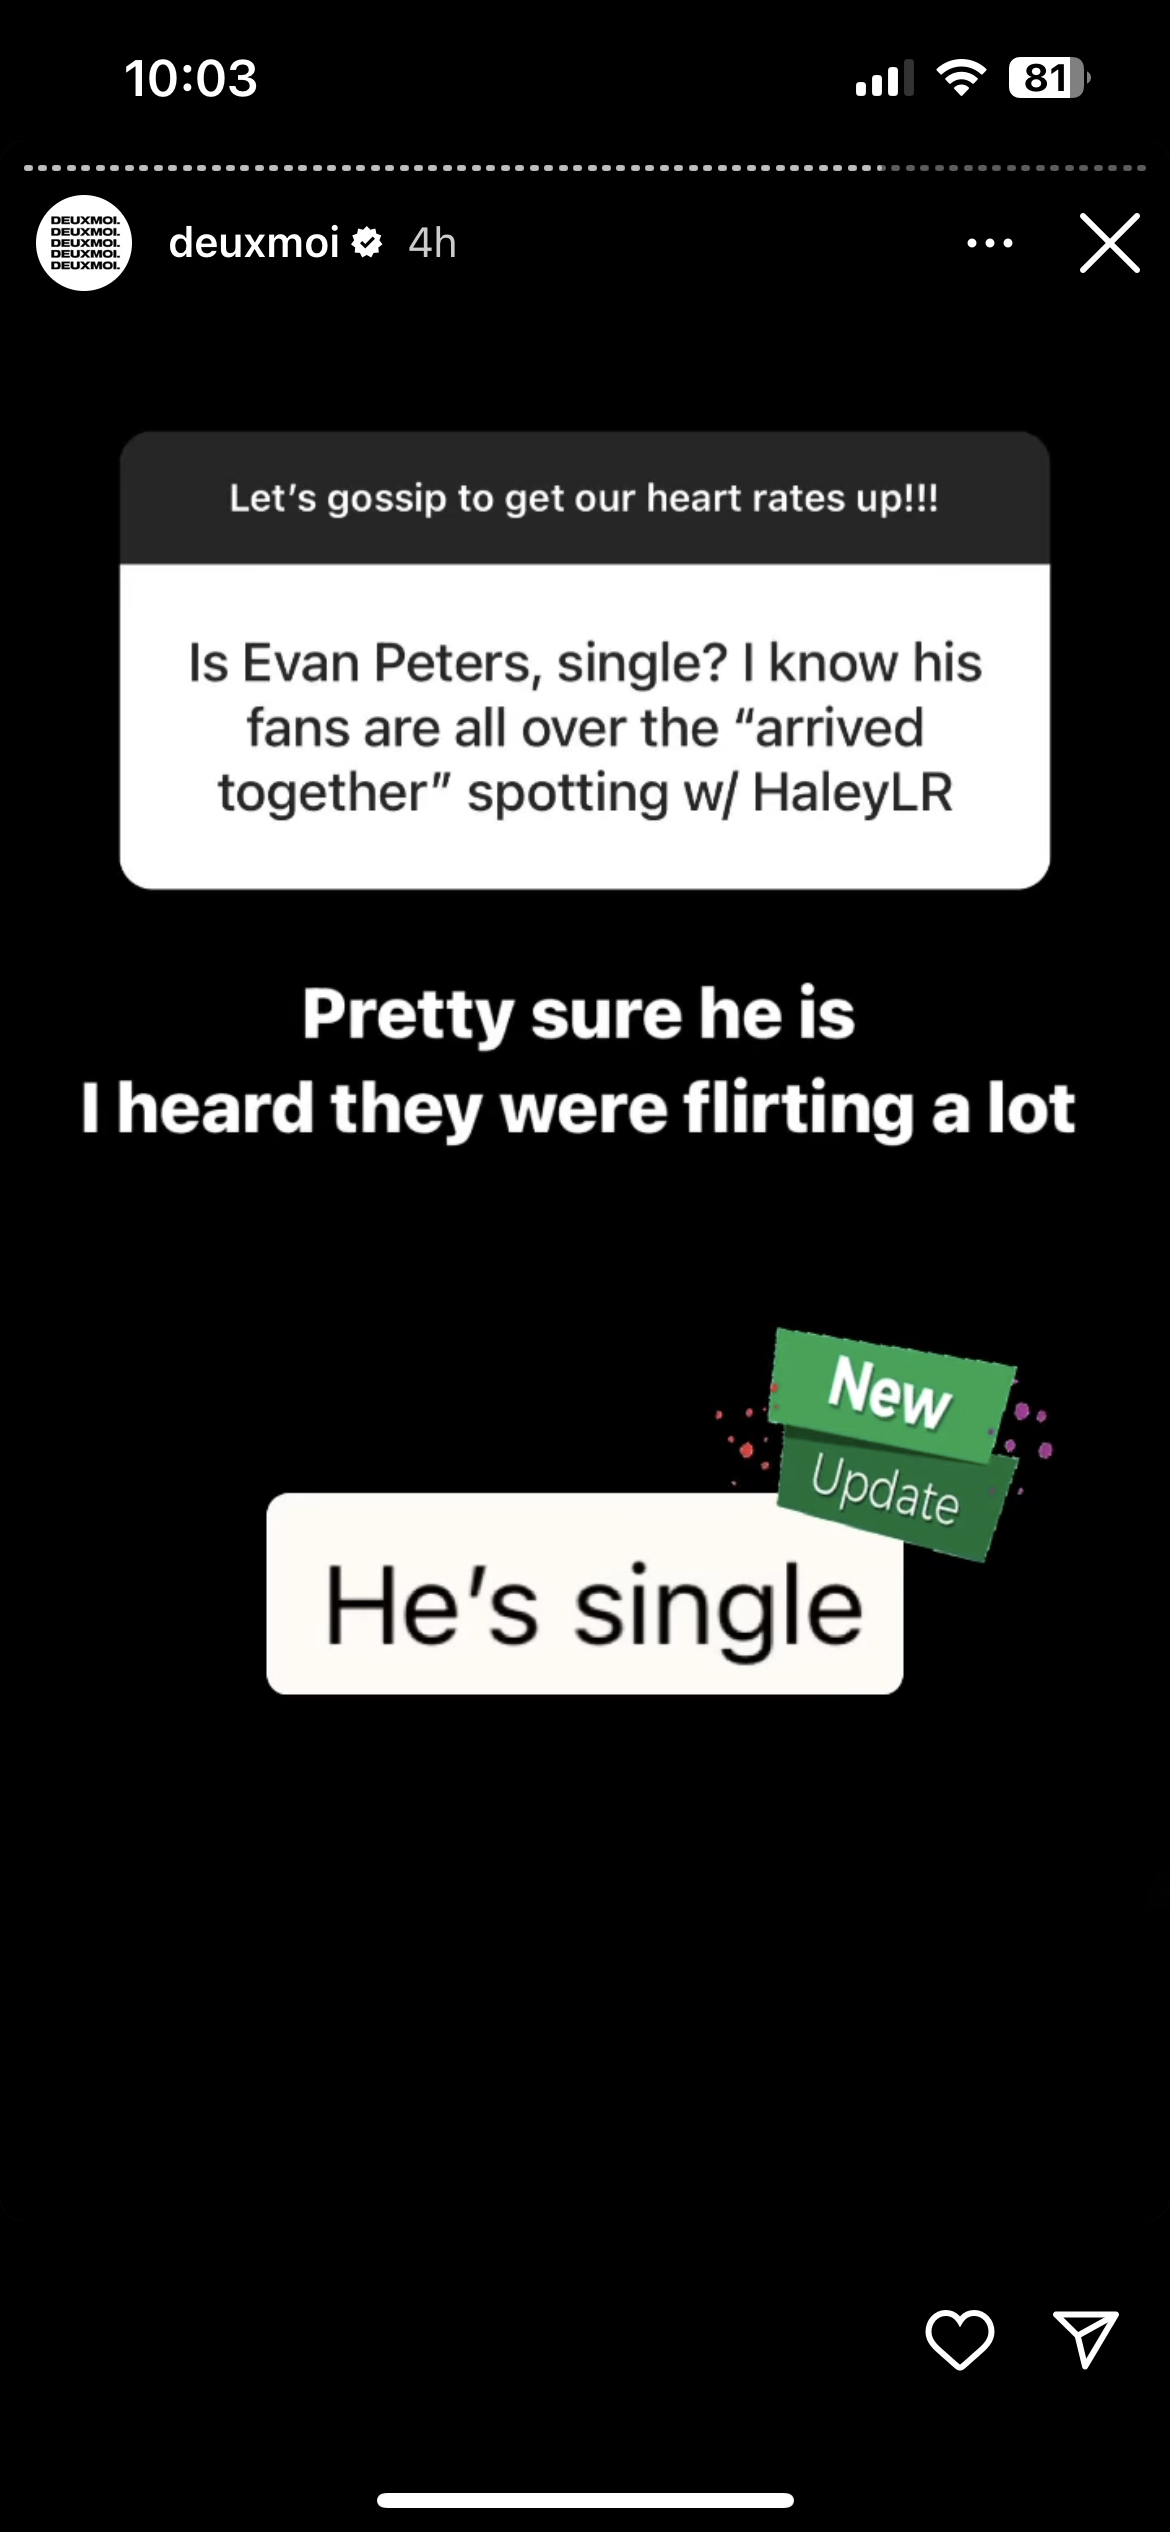 A fan enquiring Evan Peters' relationship status.